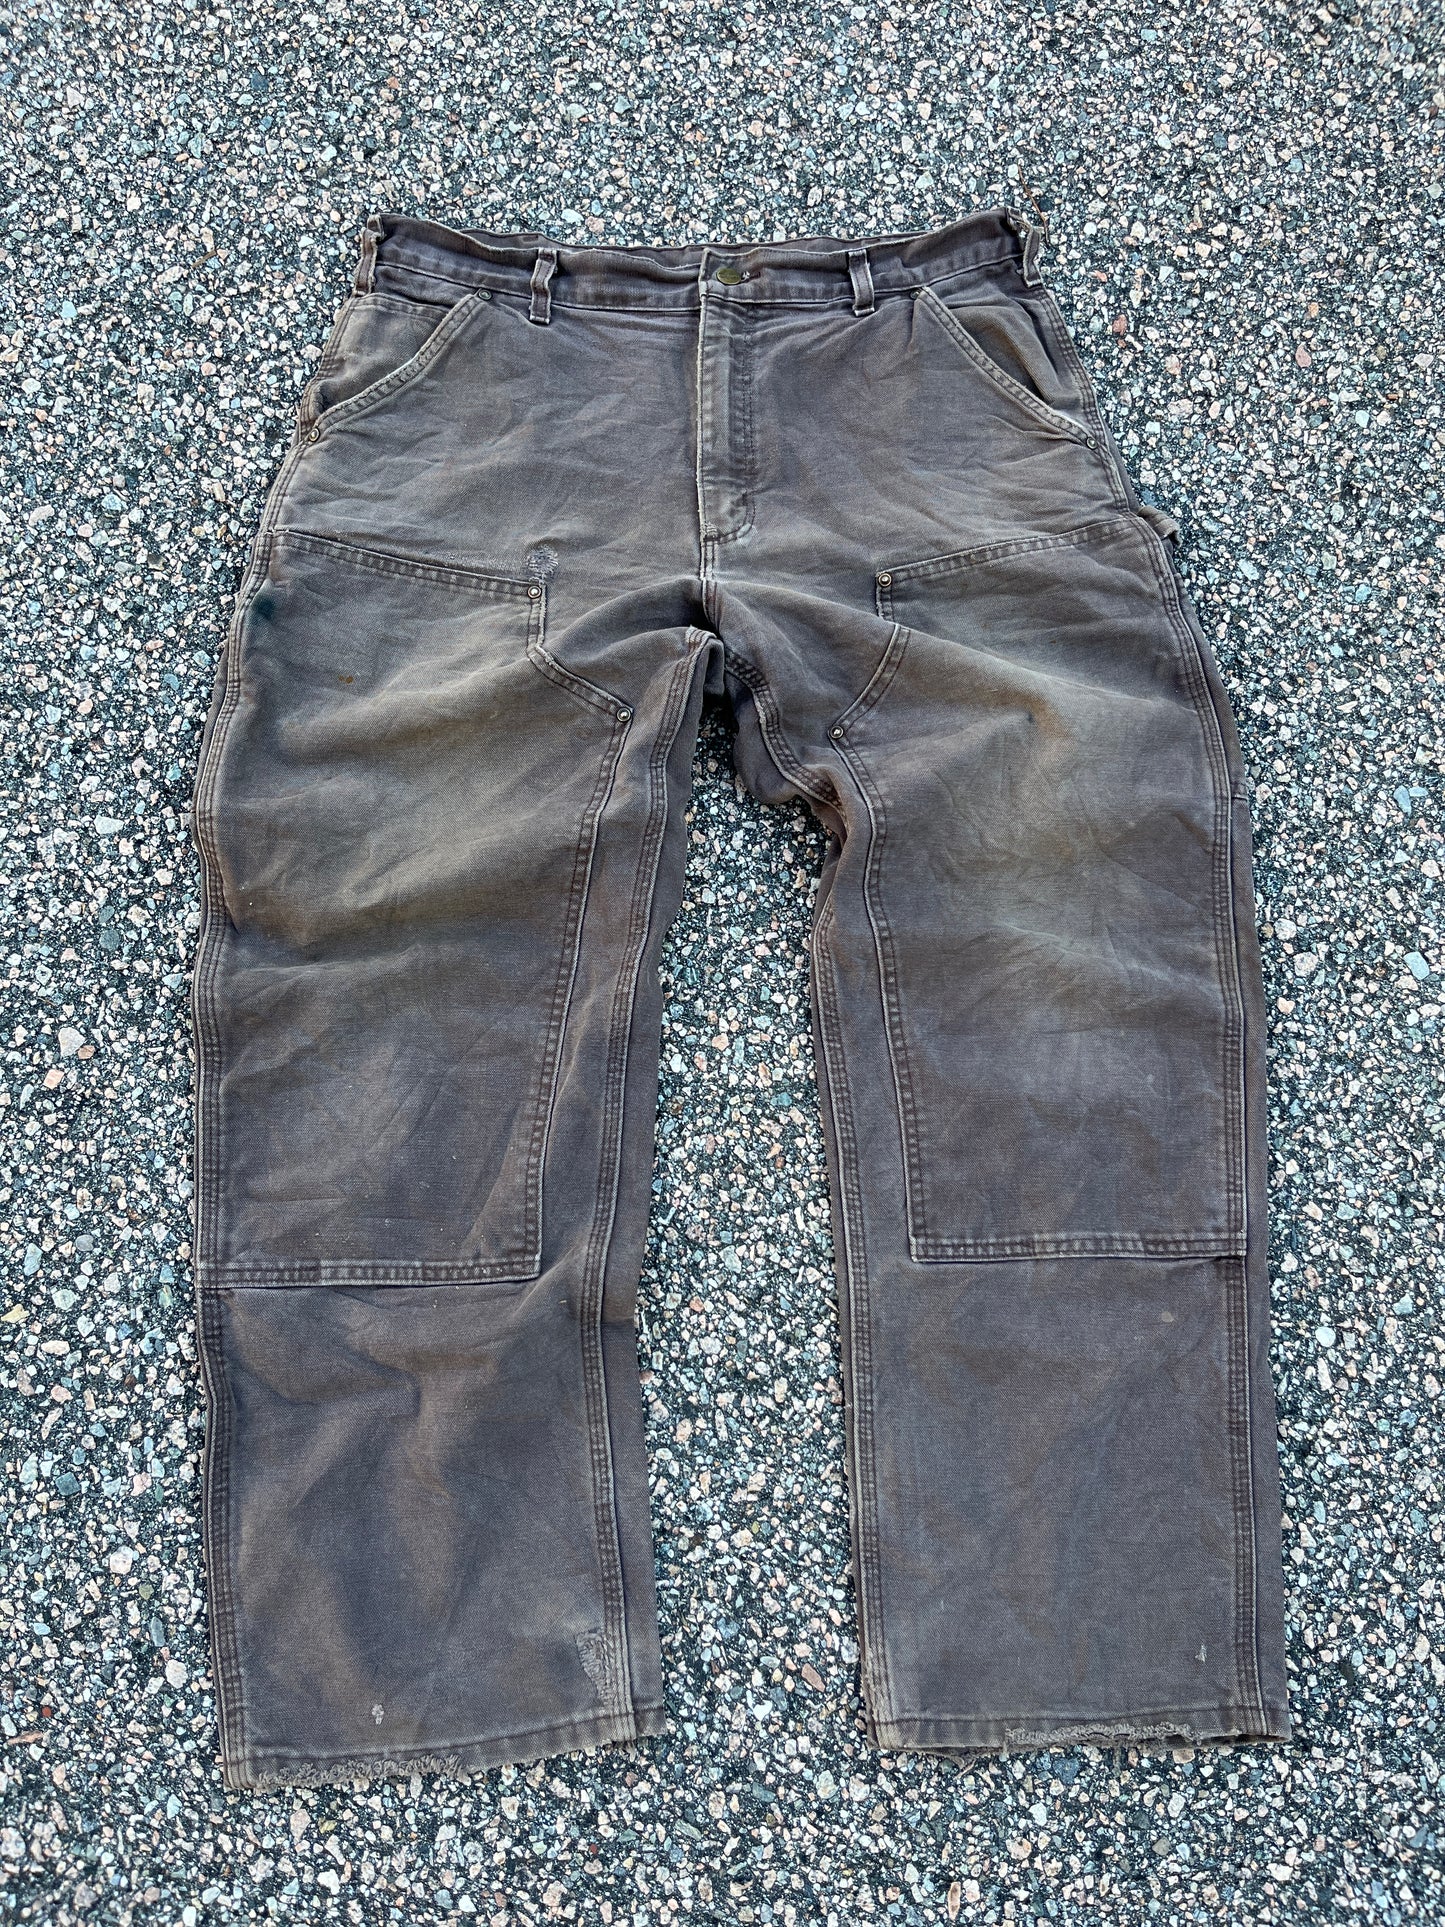 Faded Brown Carhartt Double Knee Pants - 36 x 28